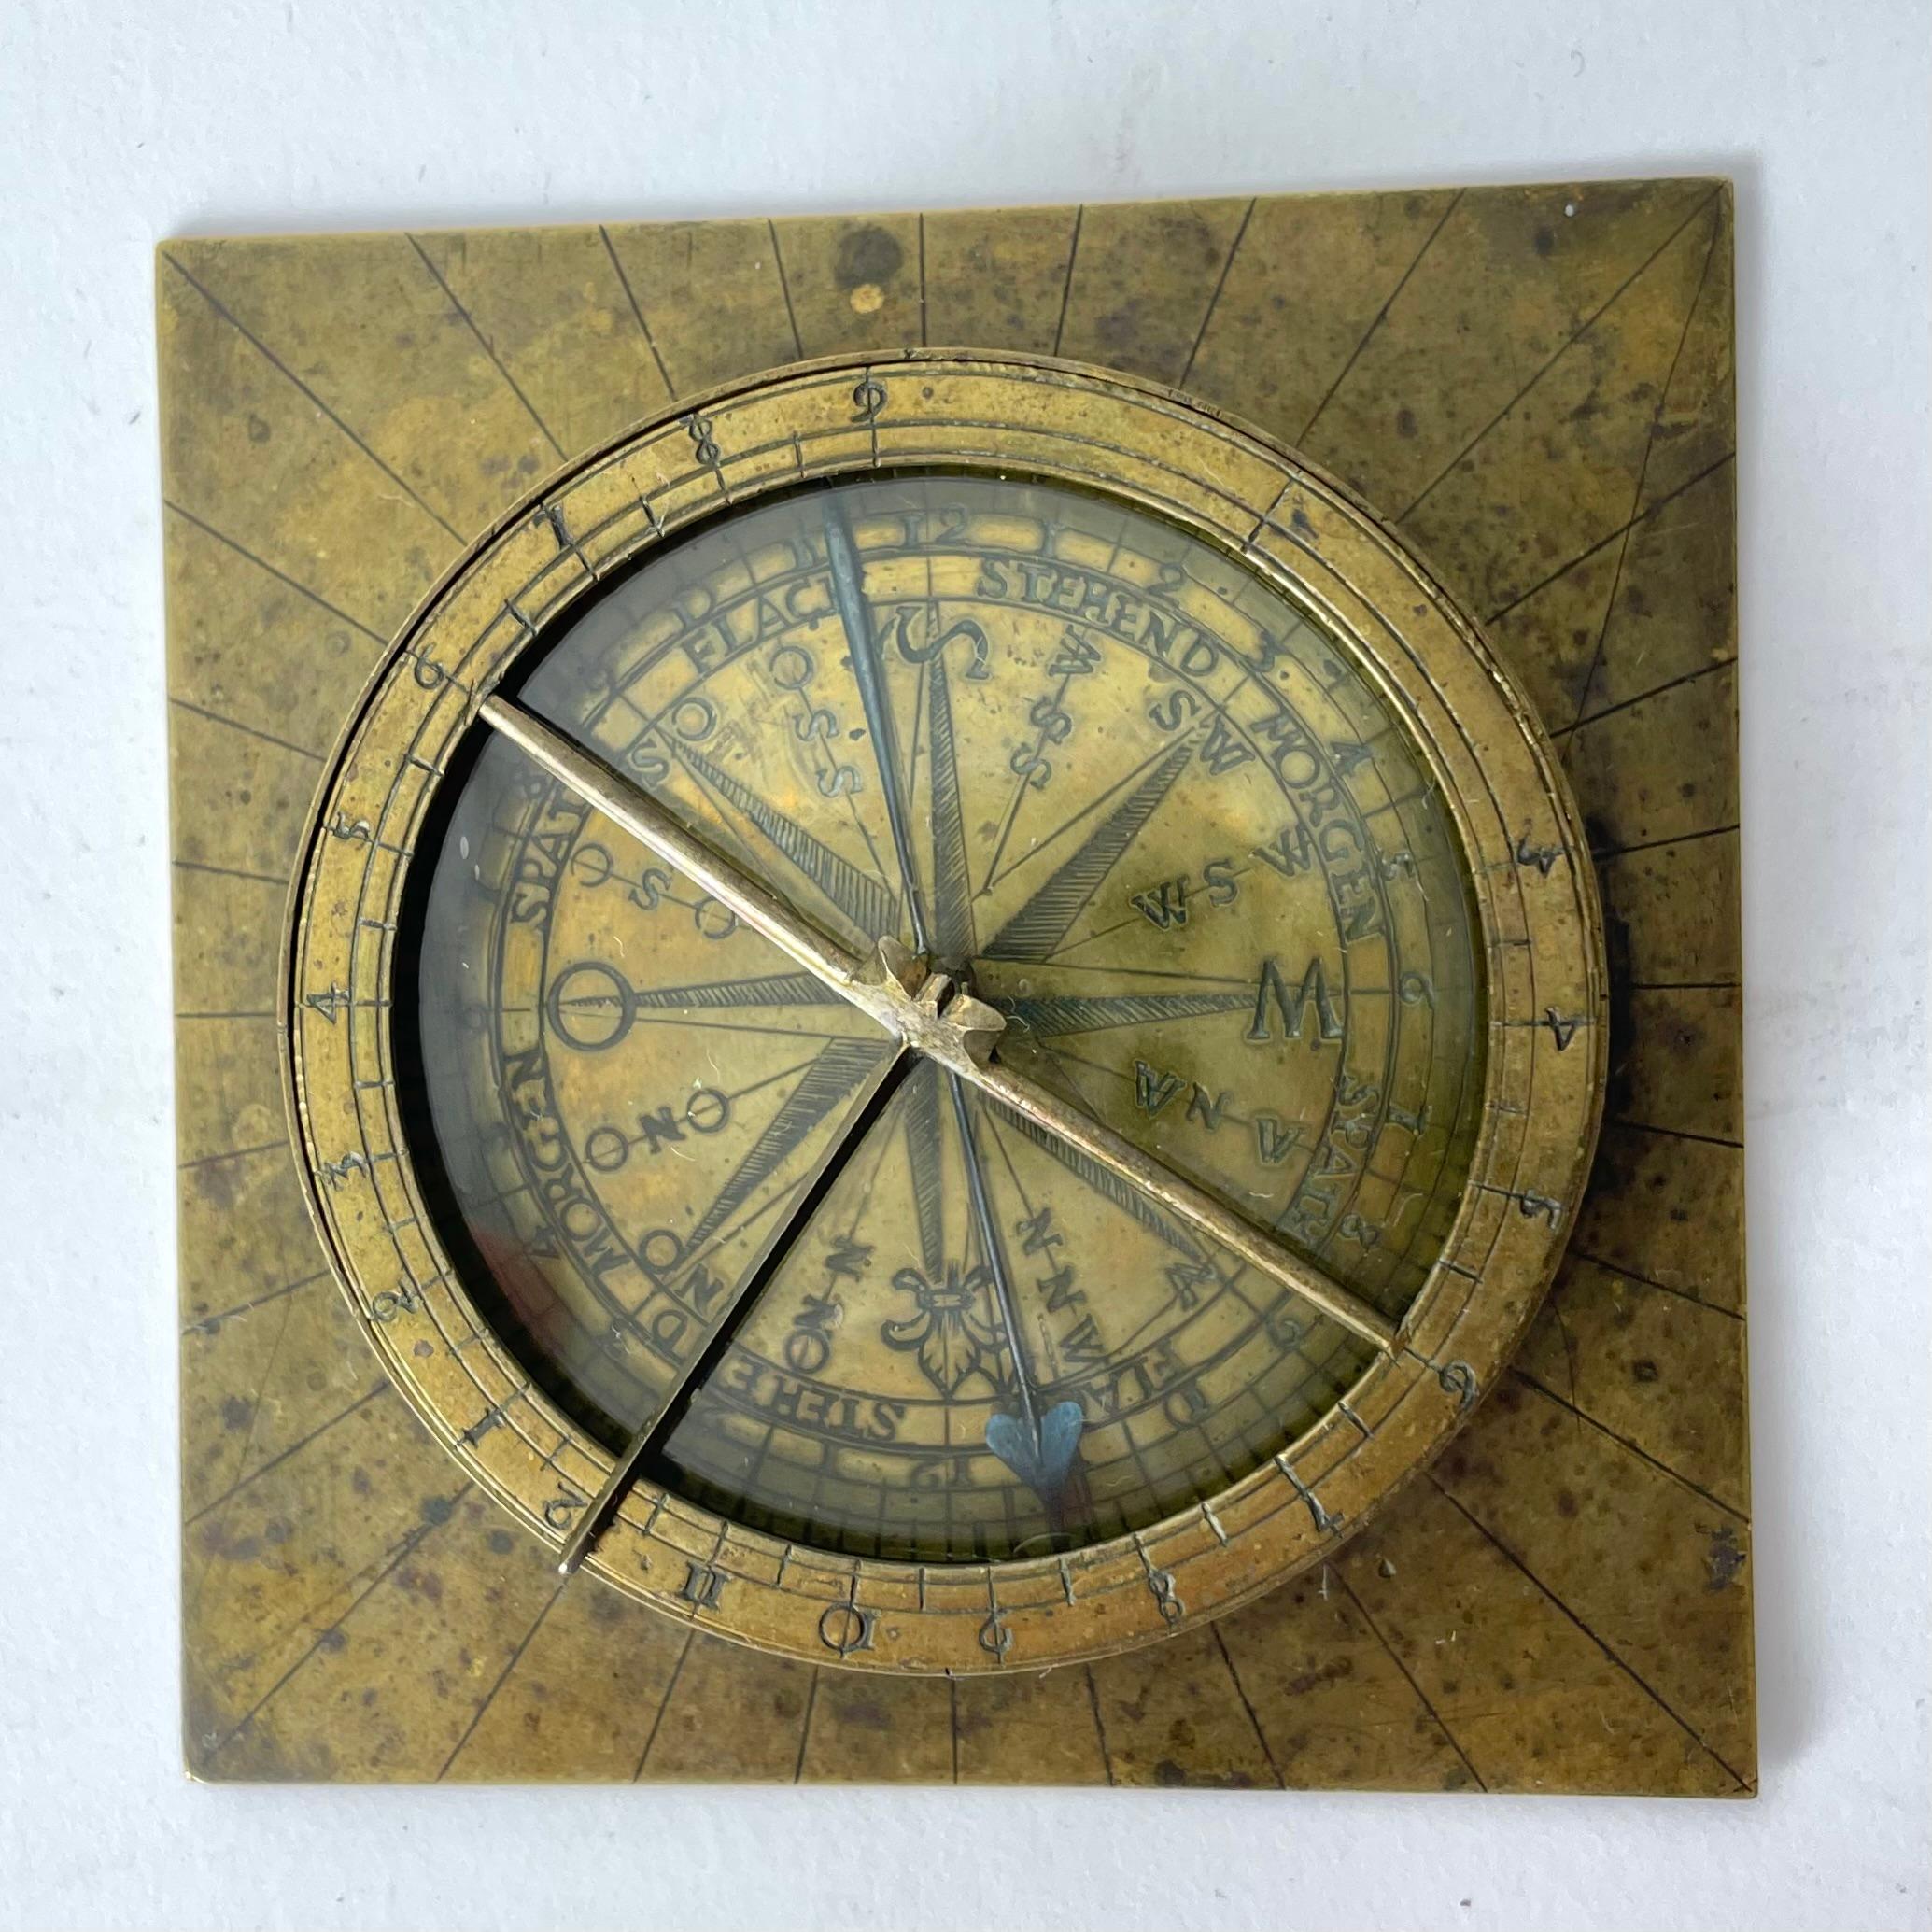 18th century compass